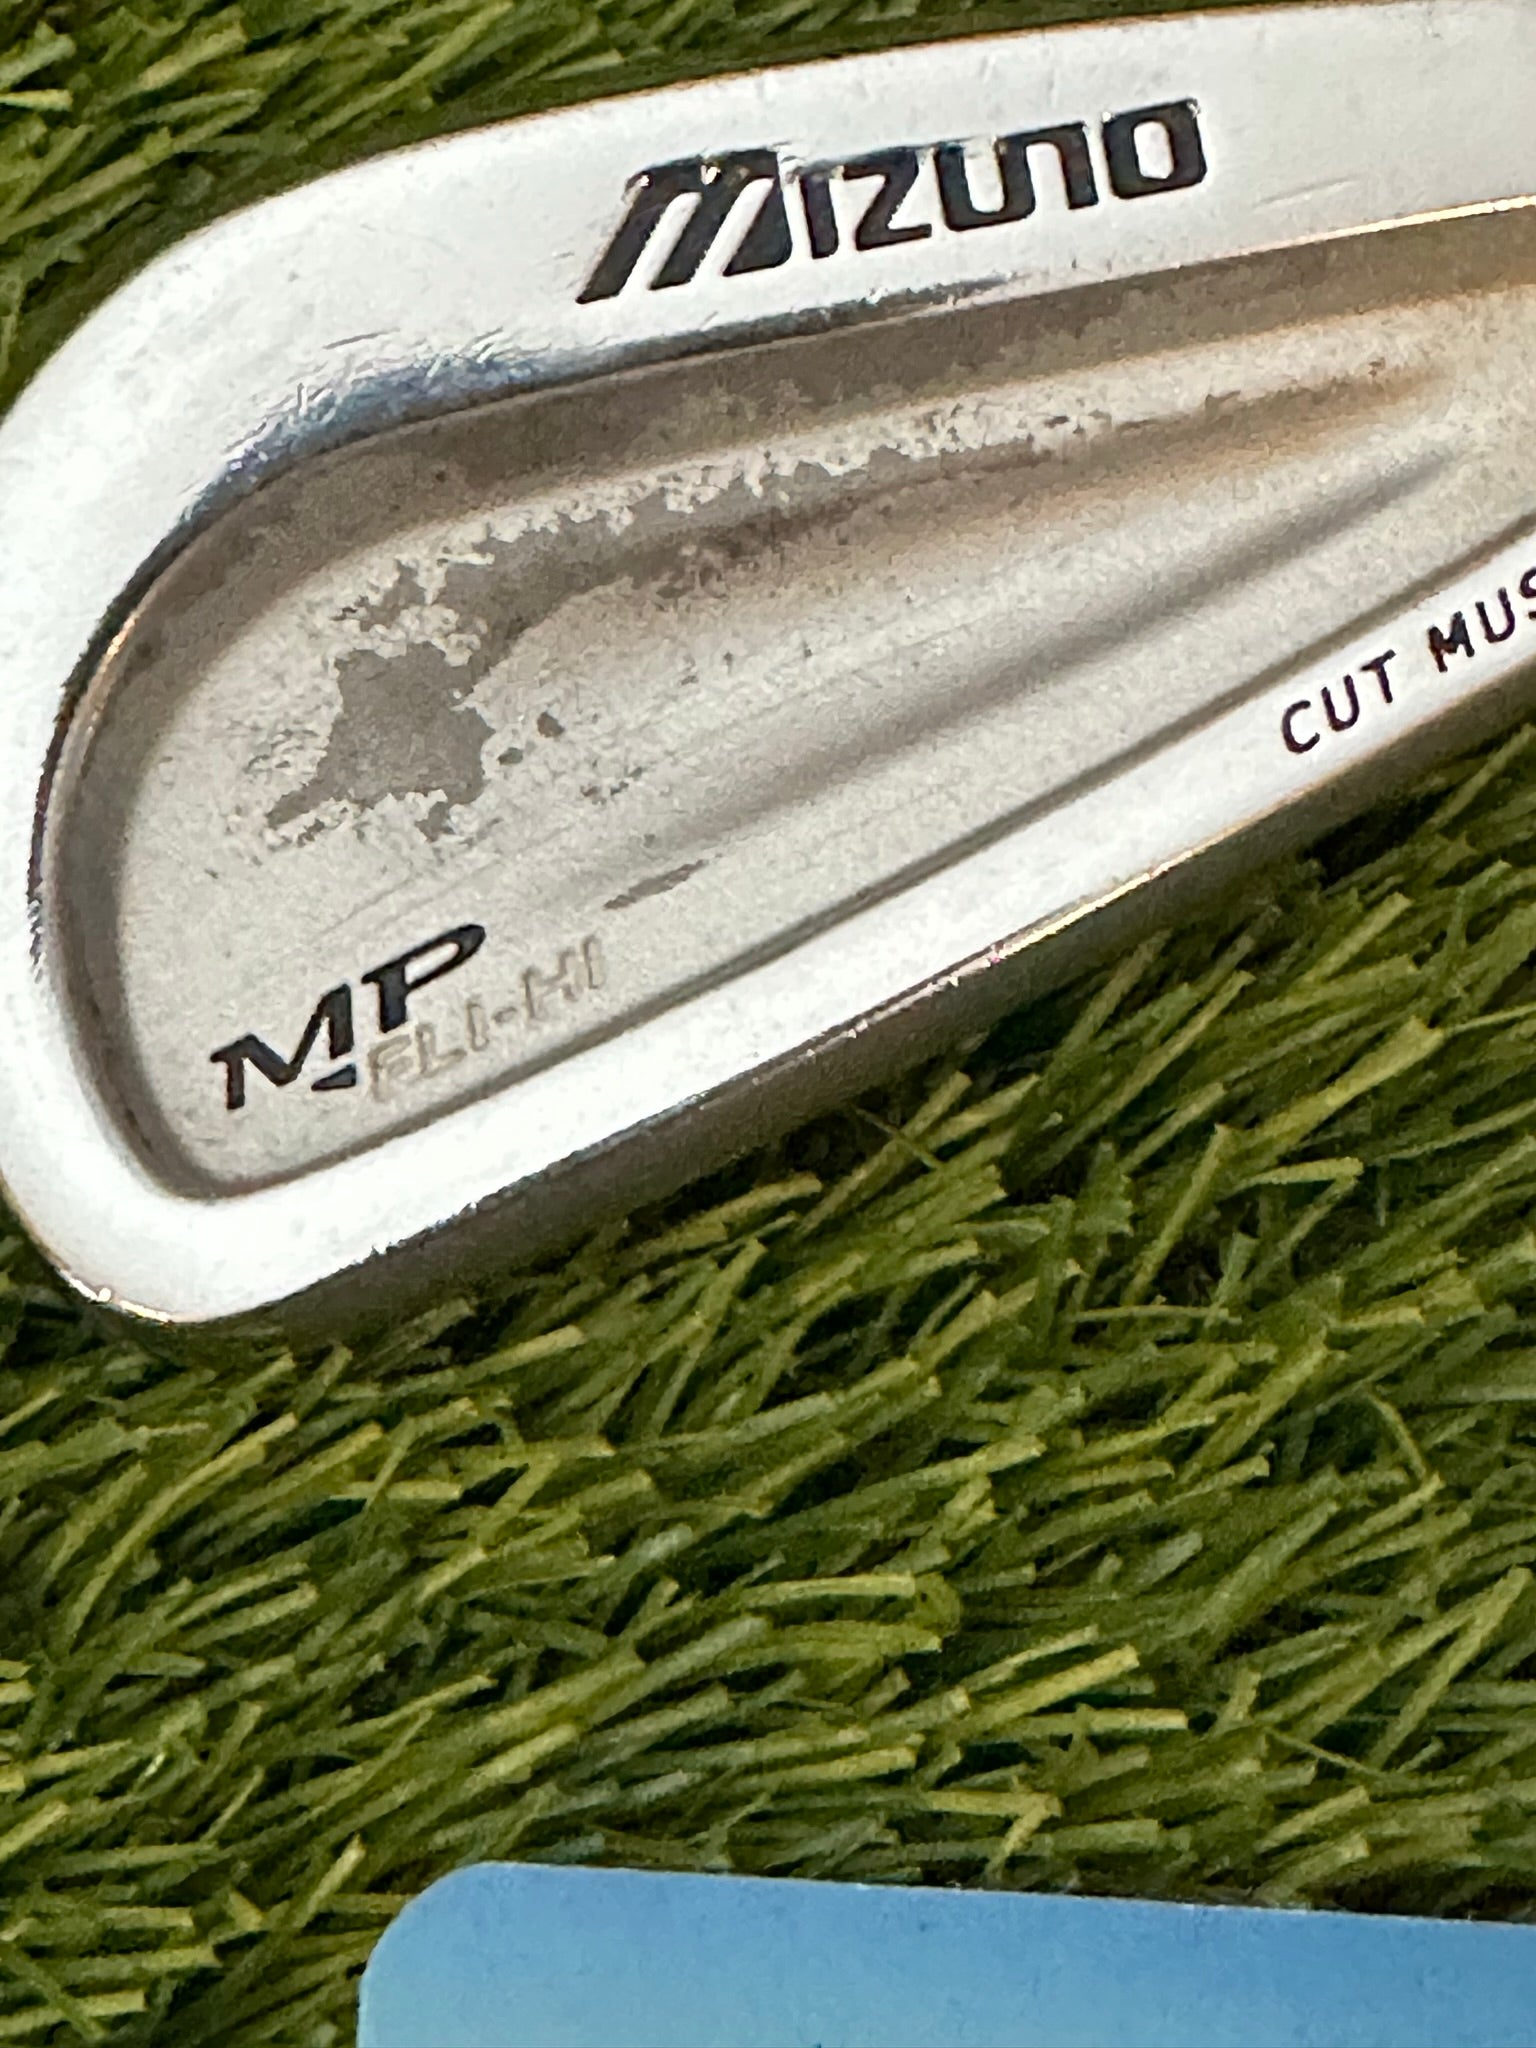 Mizuno MP FLI-HI Cut Muscle 3 Iron - Golf Store UK